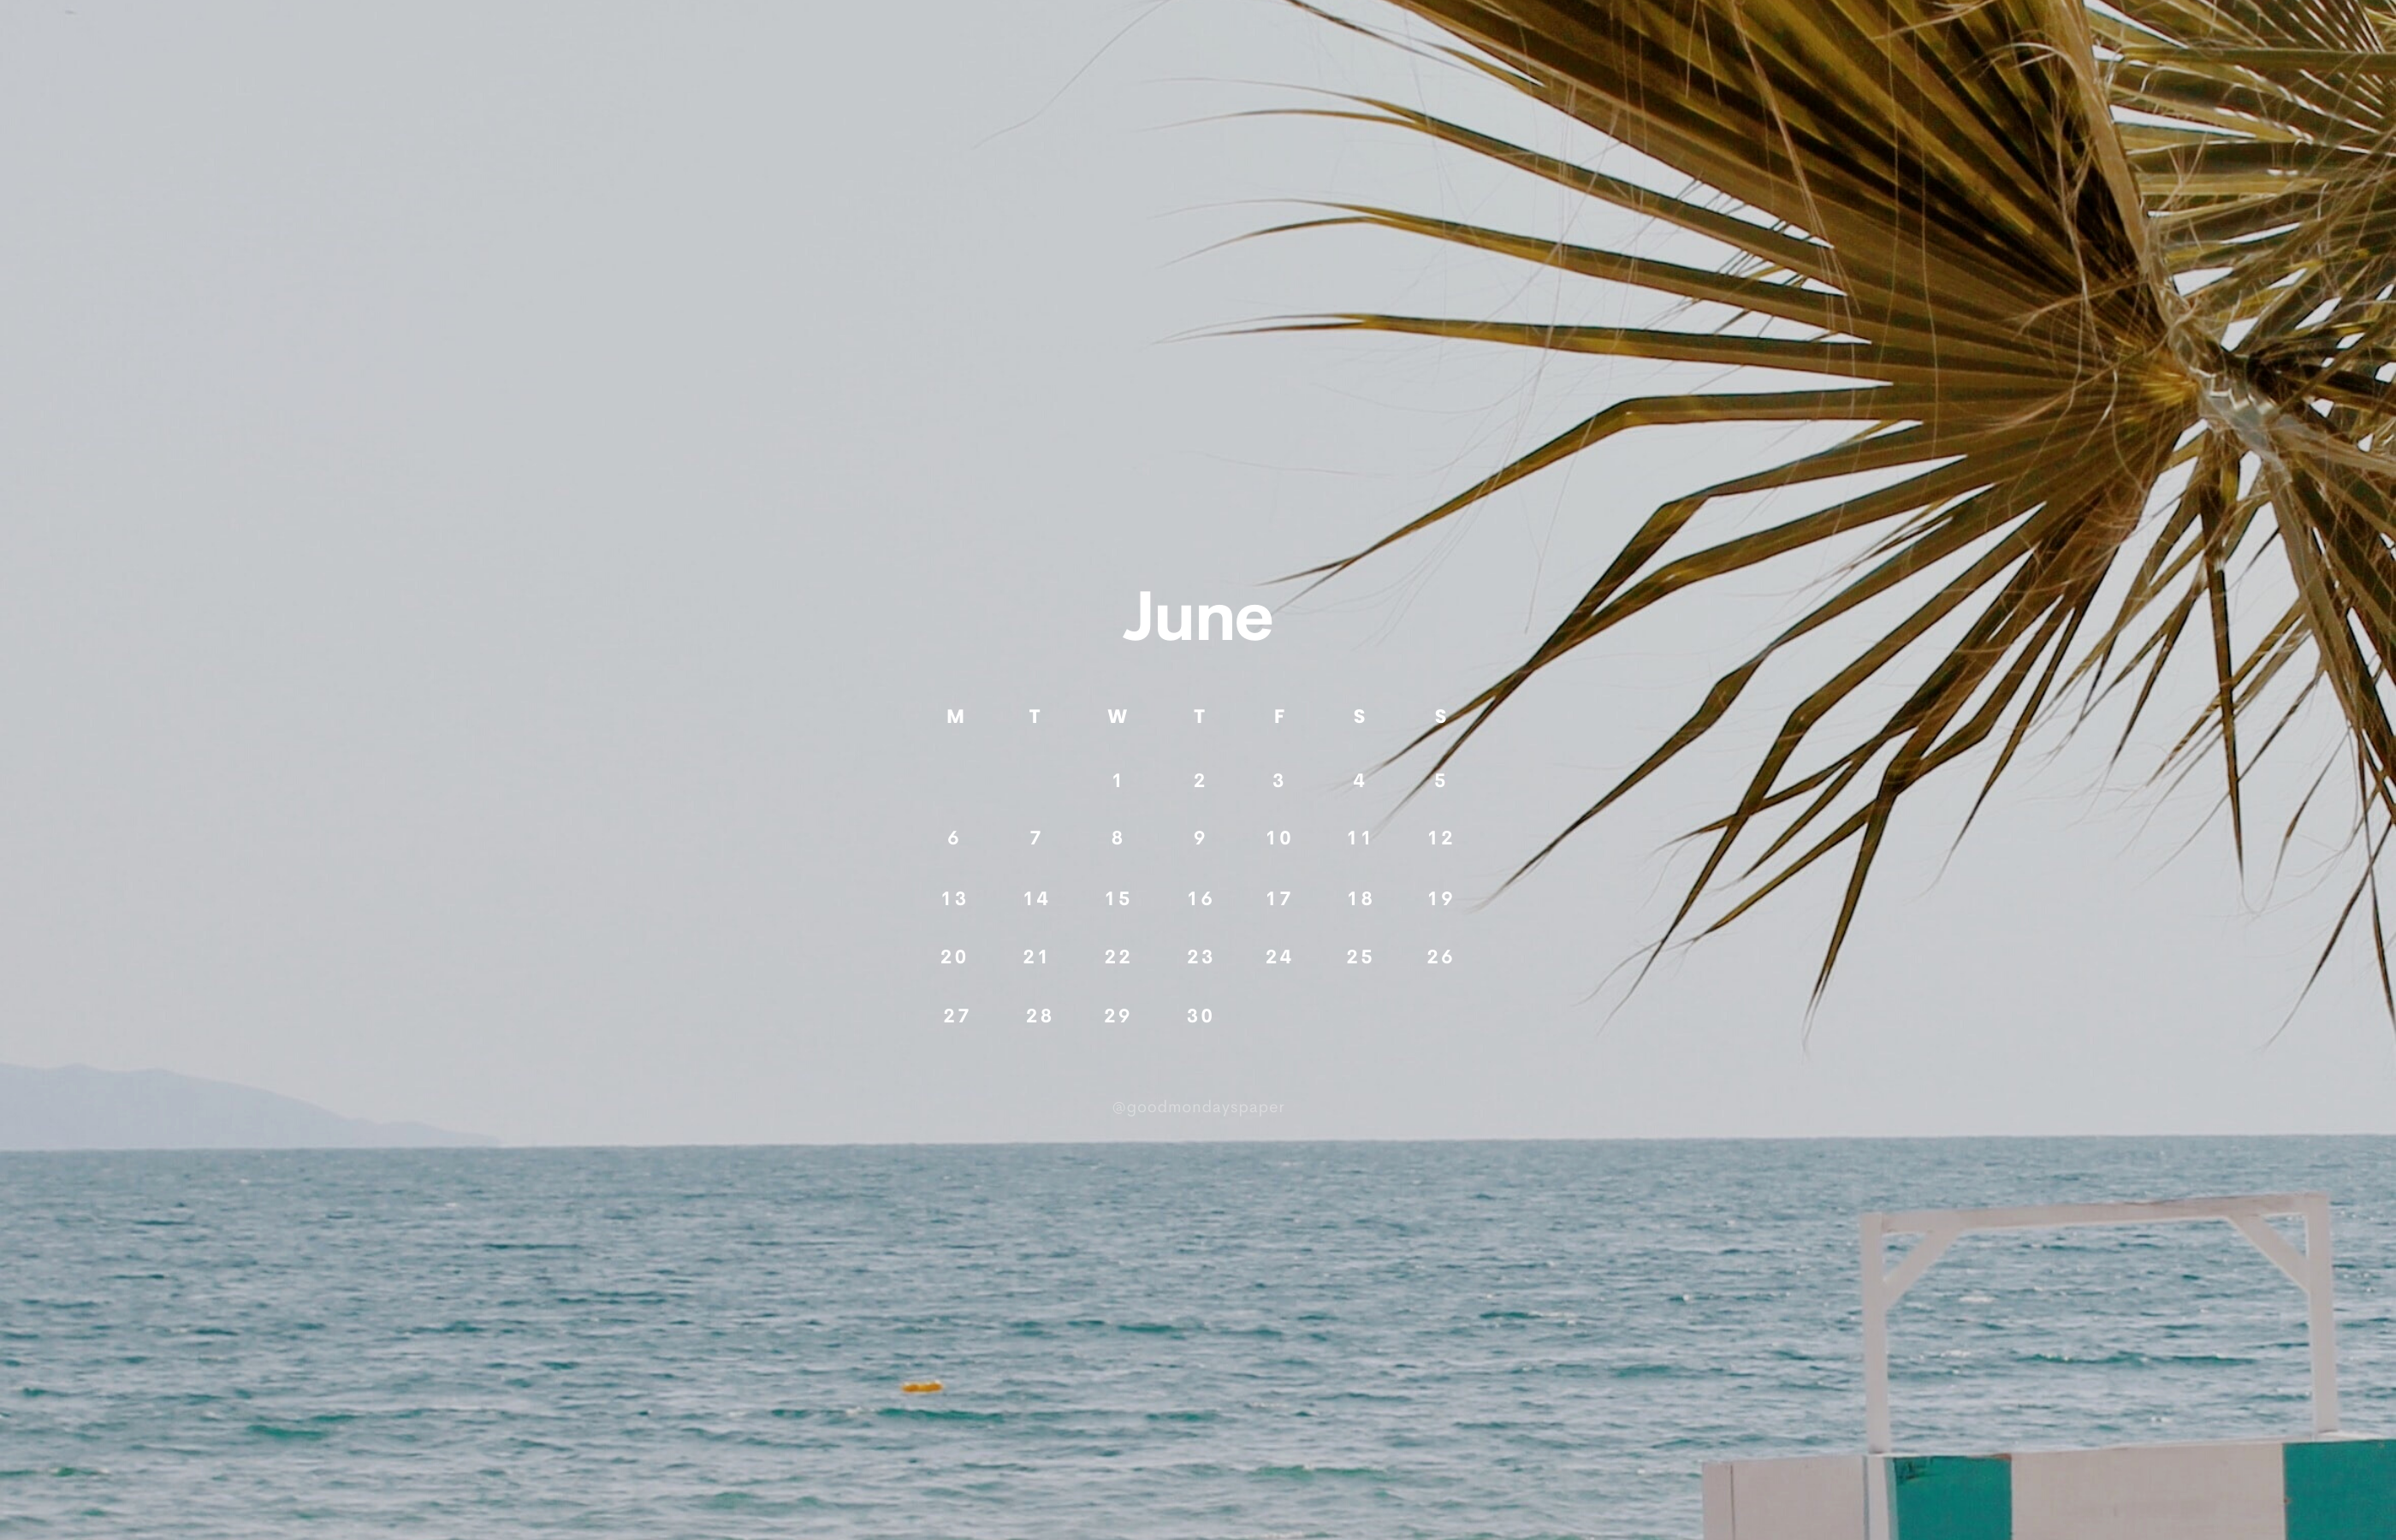 Free Desktop Wallpaper with Calendar  June 2022